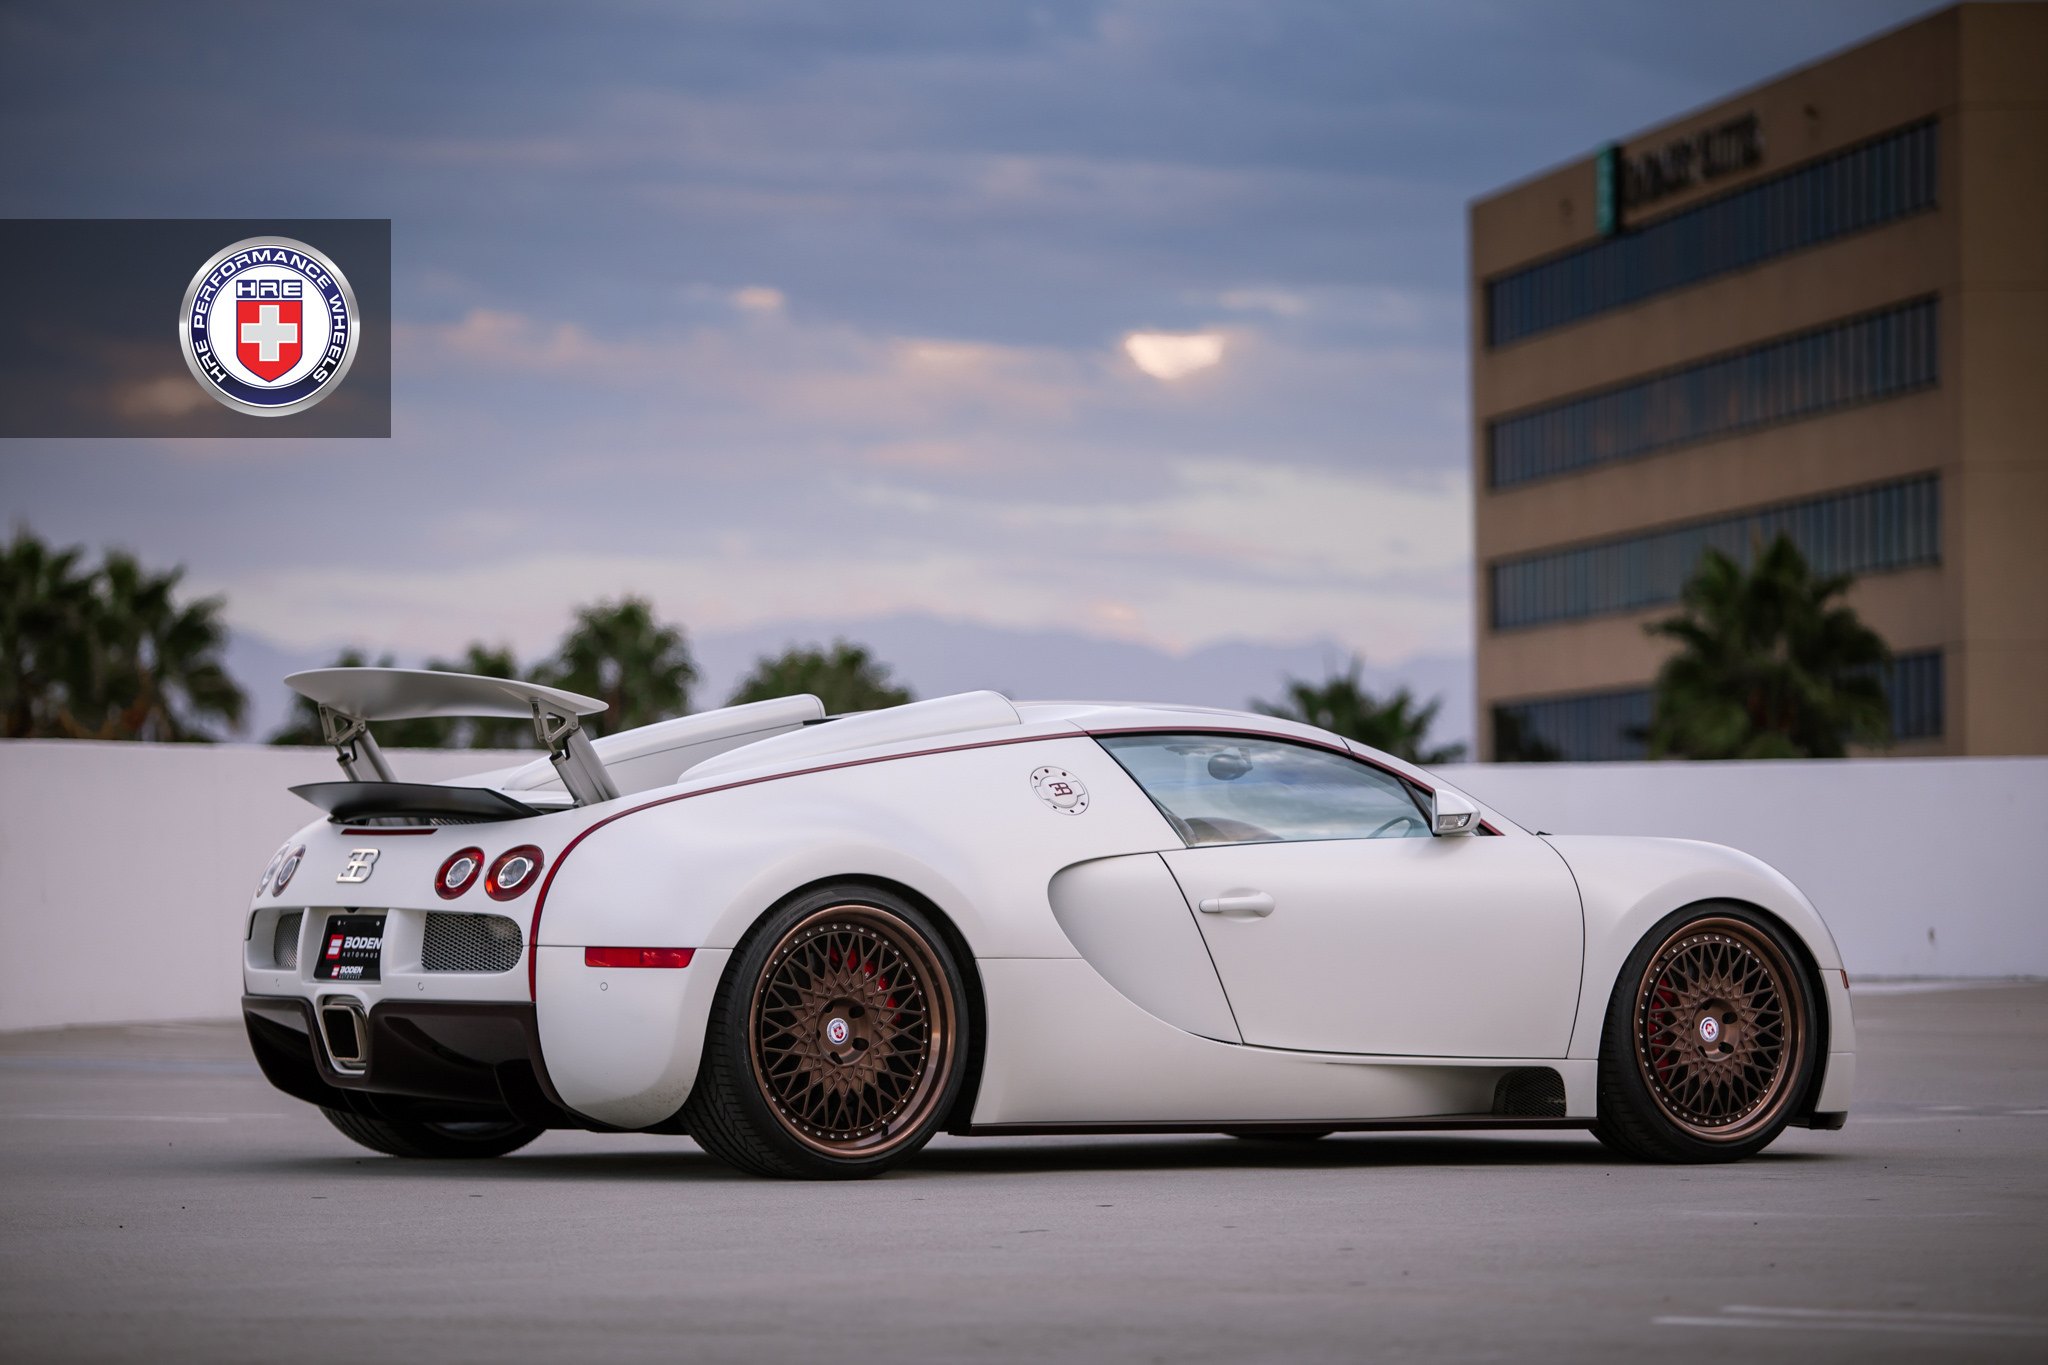 Custom Style Rear Spoiler on White Bugatti Veyron - Photo by HRE Wheels